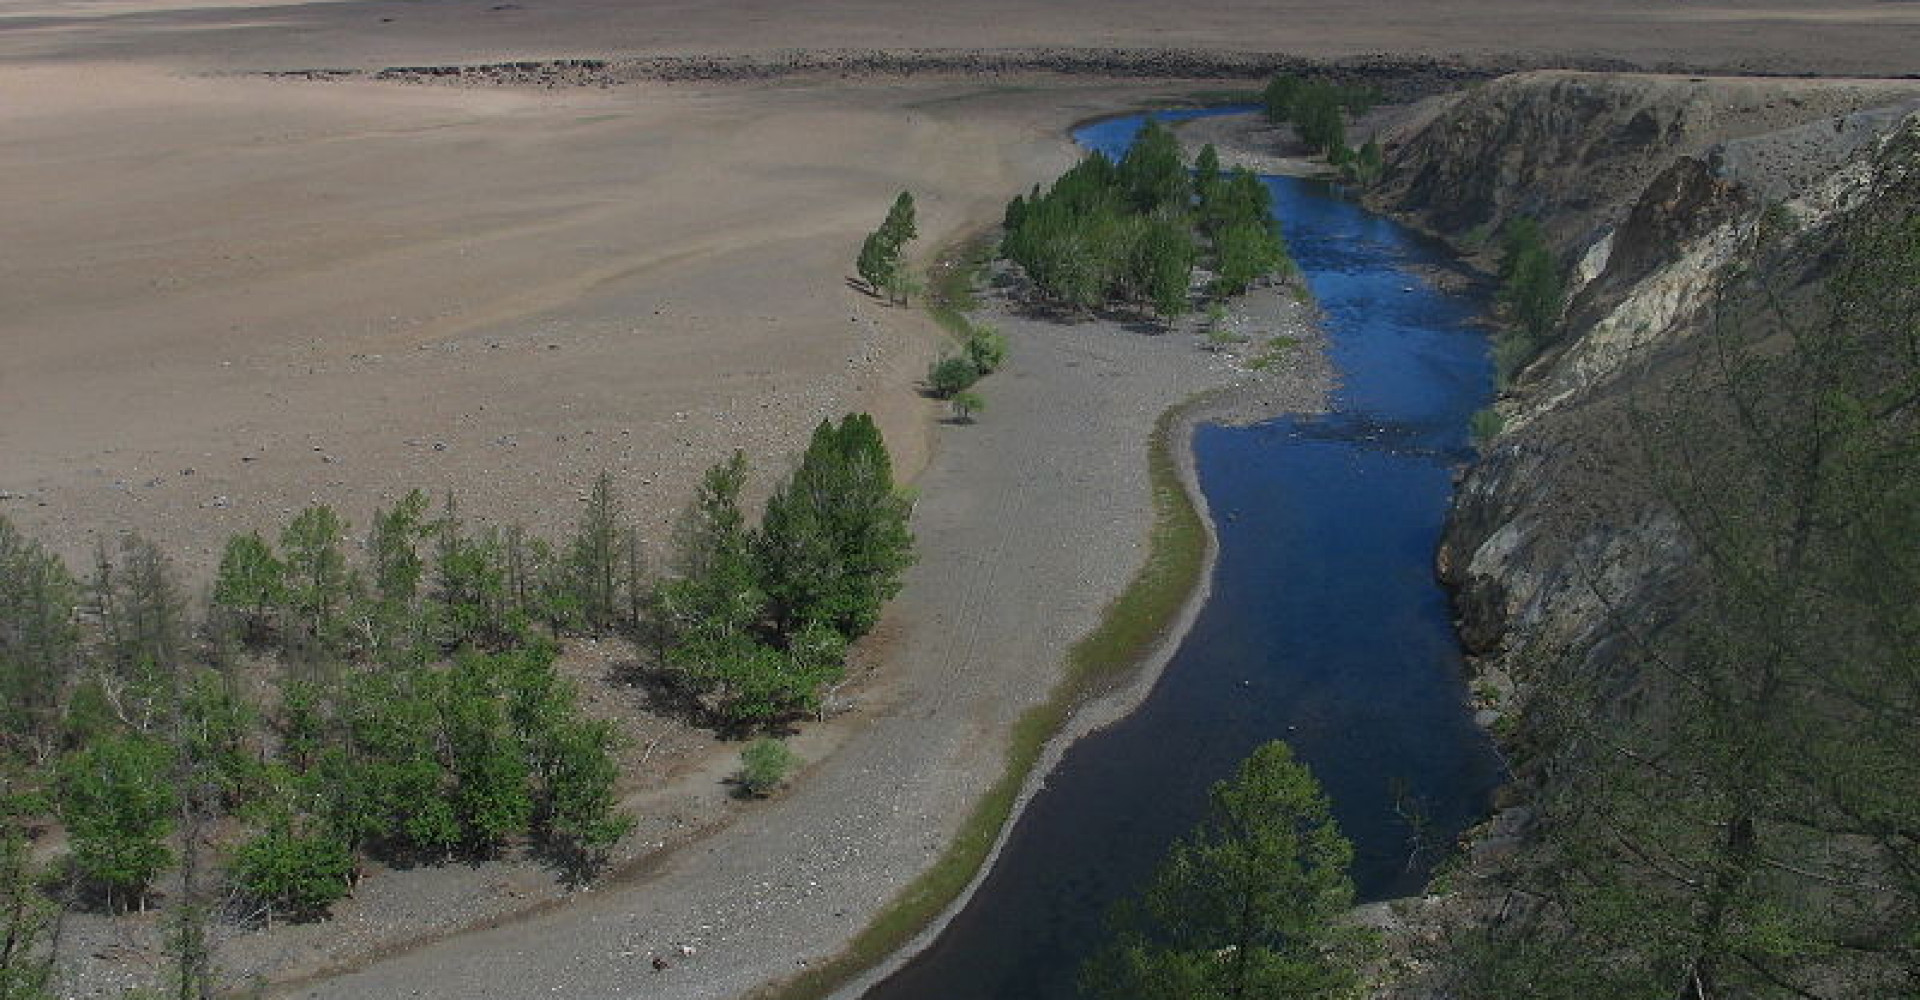 Orkhon River